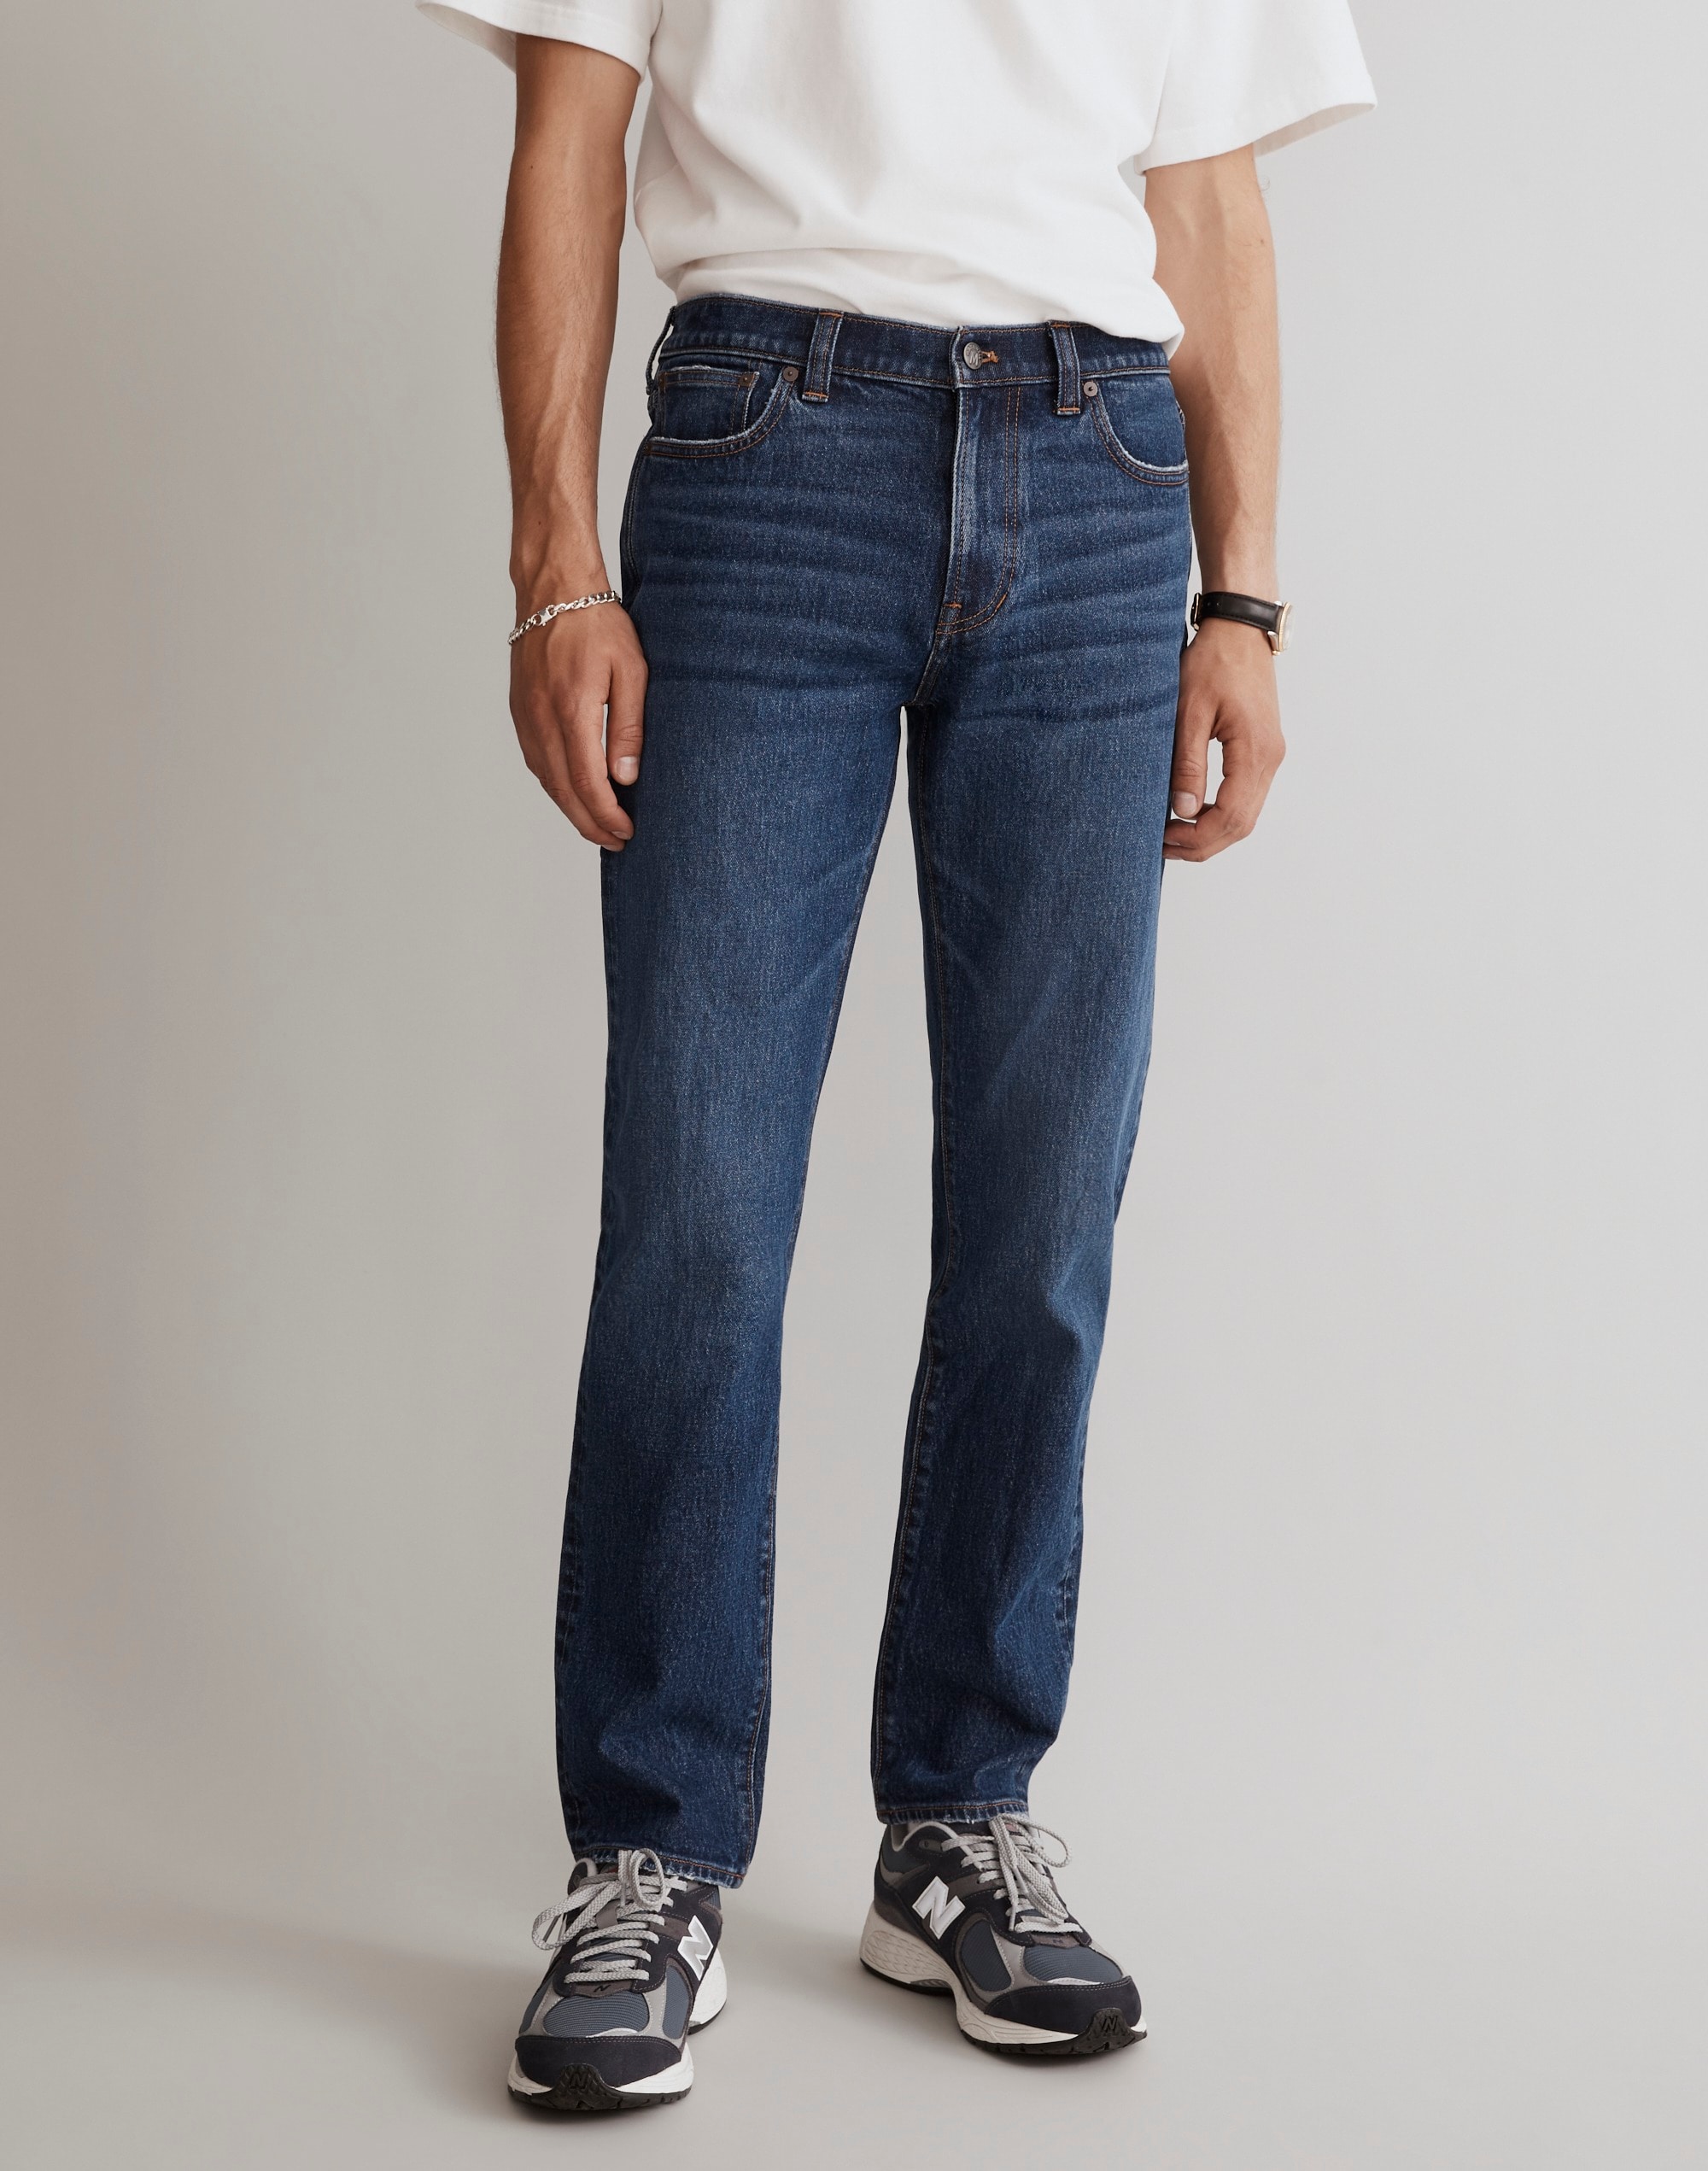 Levi's Men's Jeans for sale in Grand Rapids, Michigan, Facebook  Marketplace